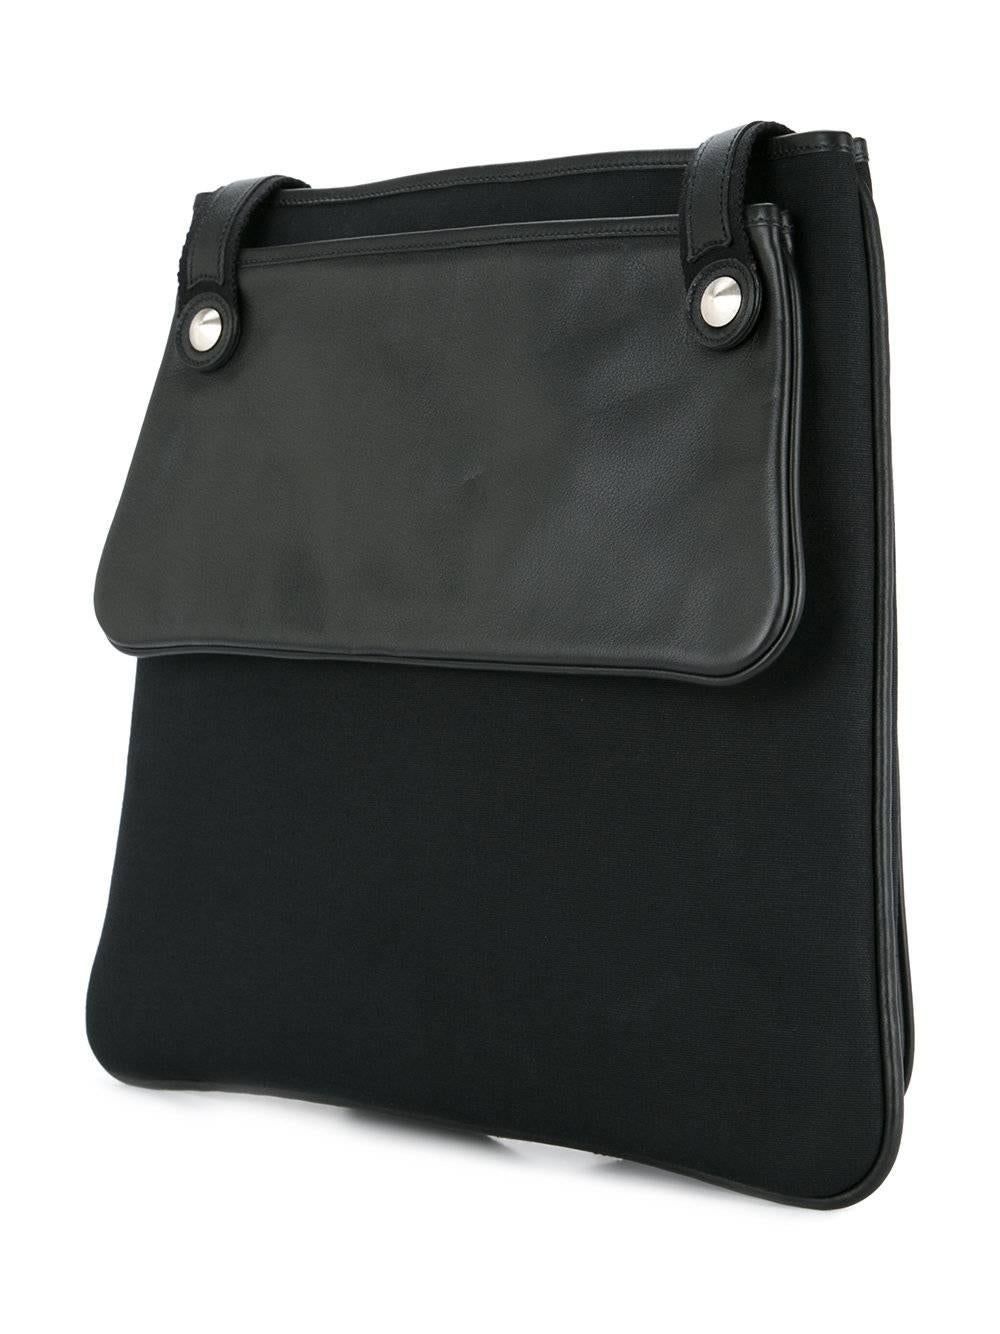 Women's Hermes Black Leather Canvas Men's Top Handle Satchel Tote Shoulder Bag in Box